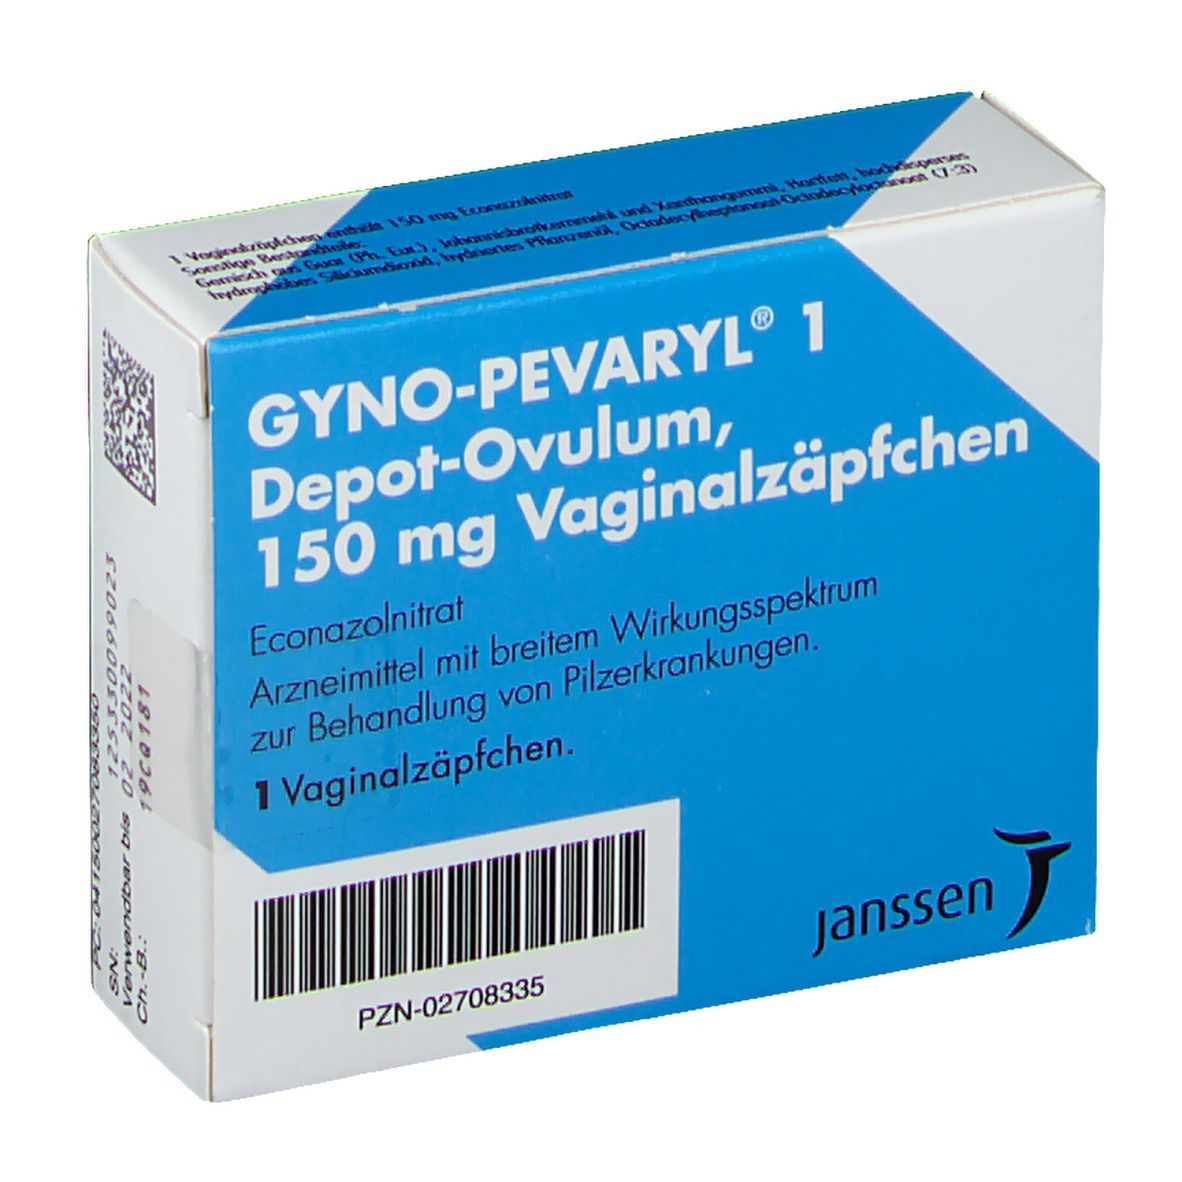 Gyno Pevaryl 1 depot Ovulum 150 mg